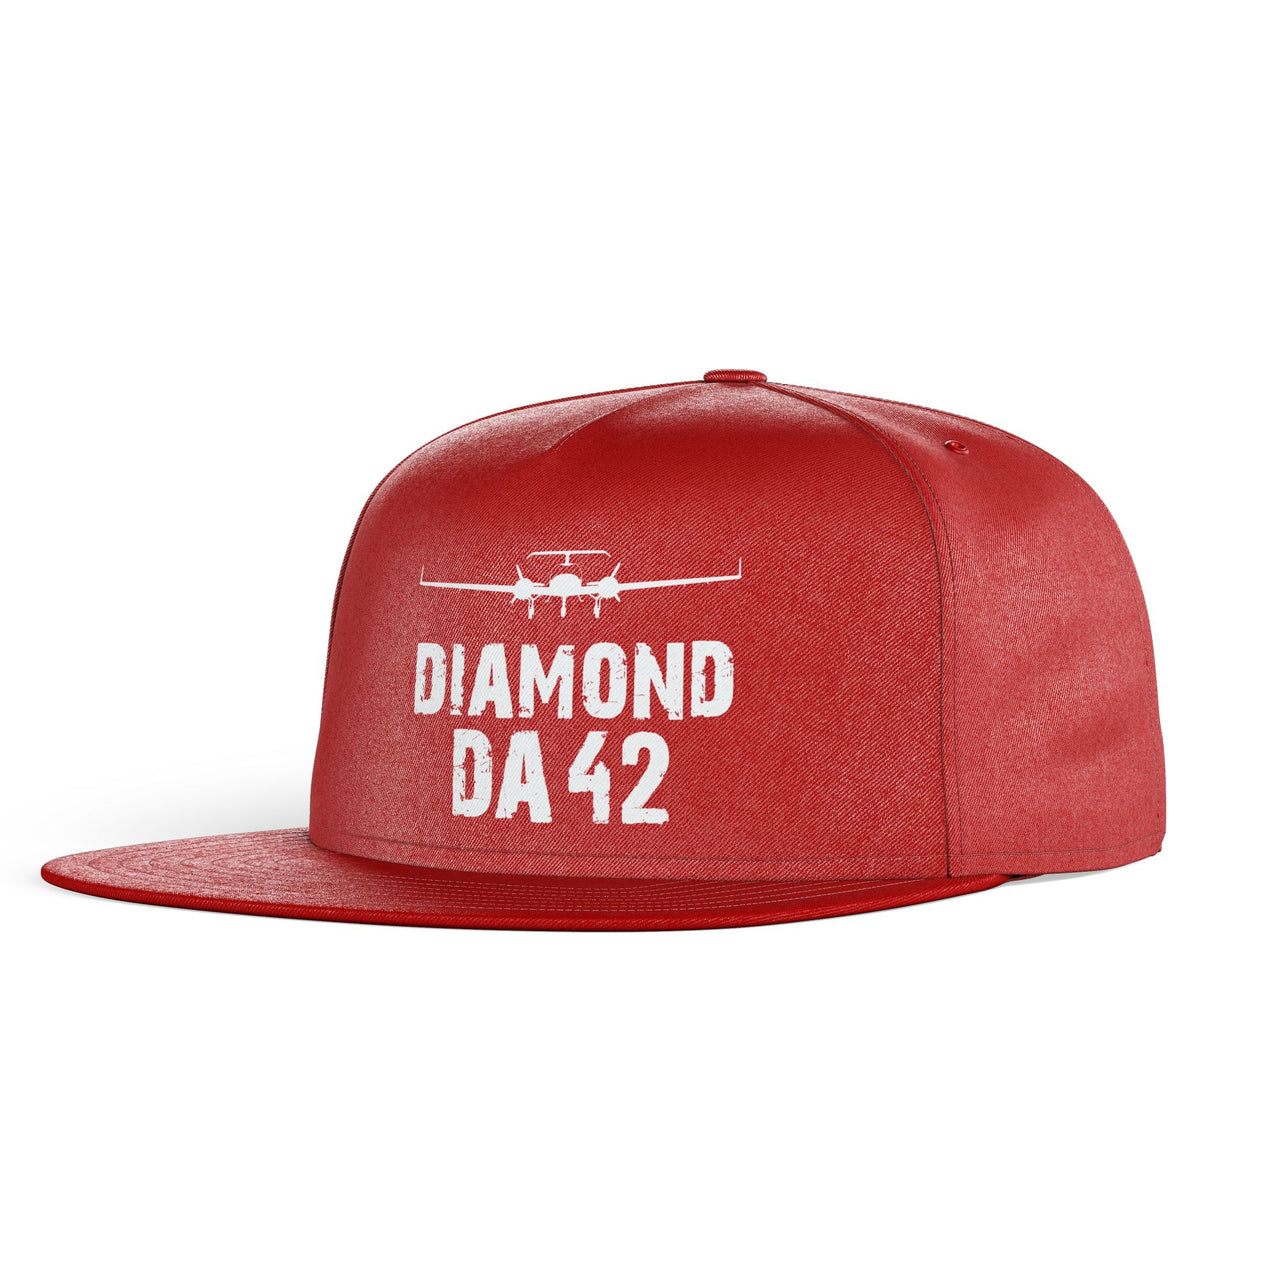 Diamond DA42 & Plane Designed Snapback Caps & Hats